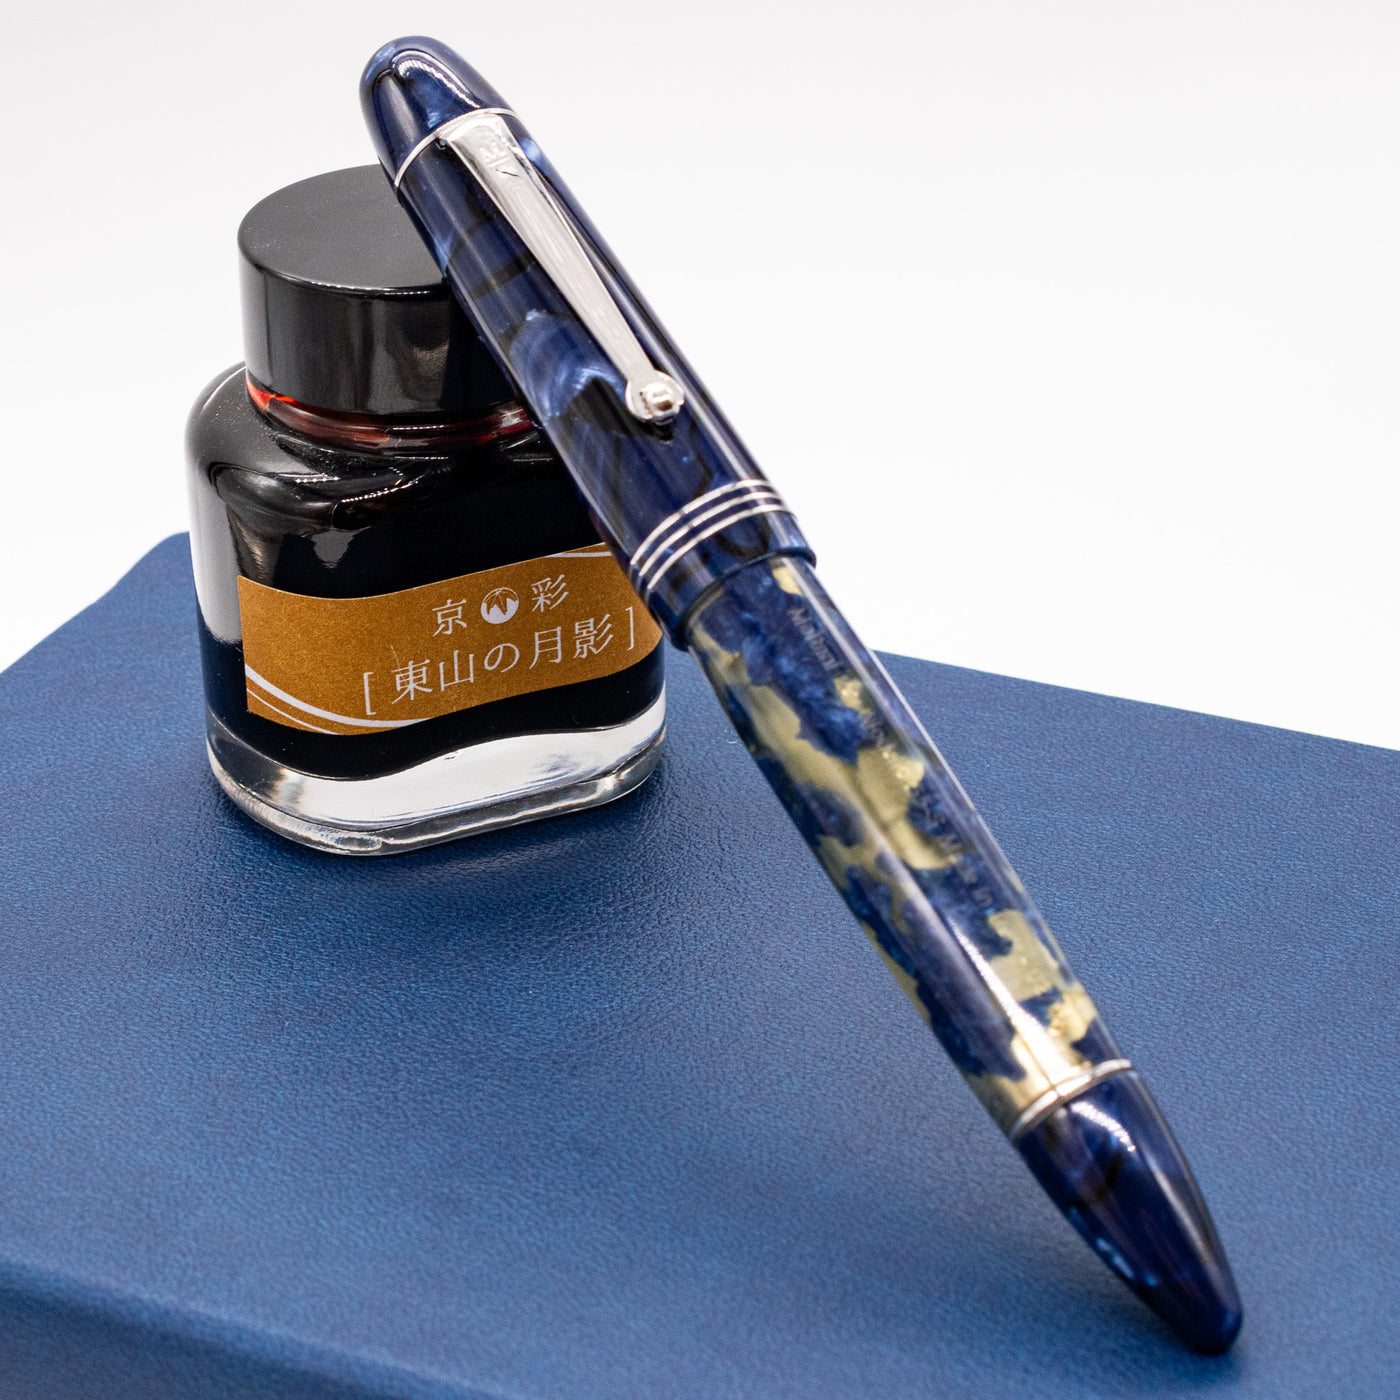 Molteni Modelo 55 Fountain Pen - Royal Blue Lucens Celluloid capped